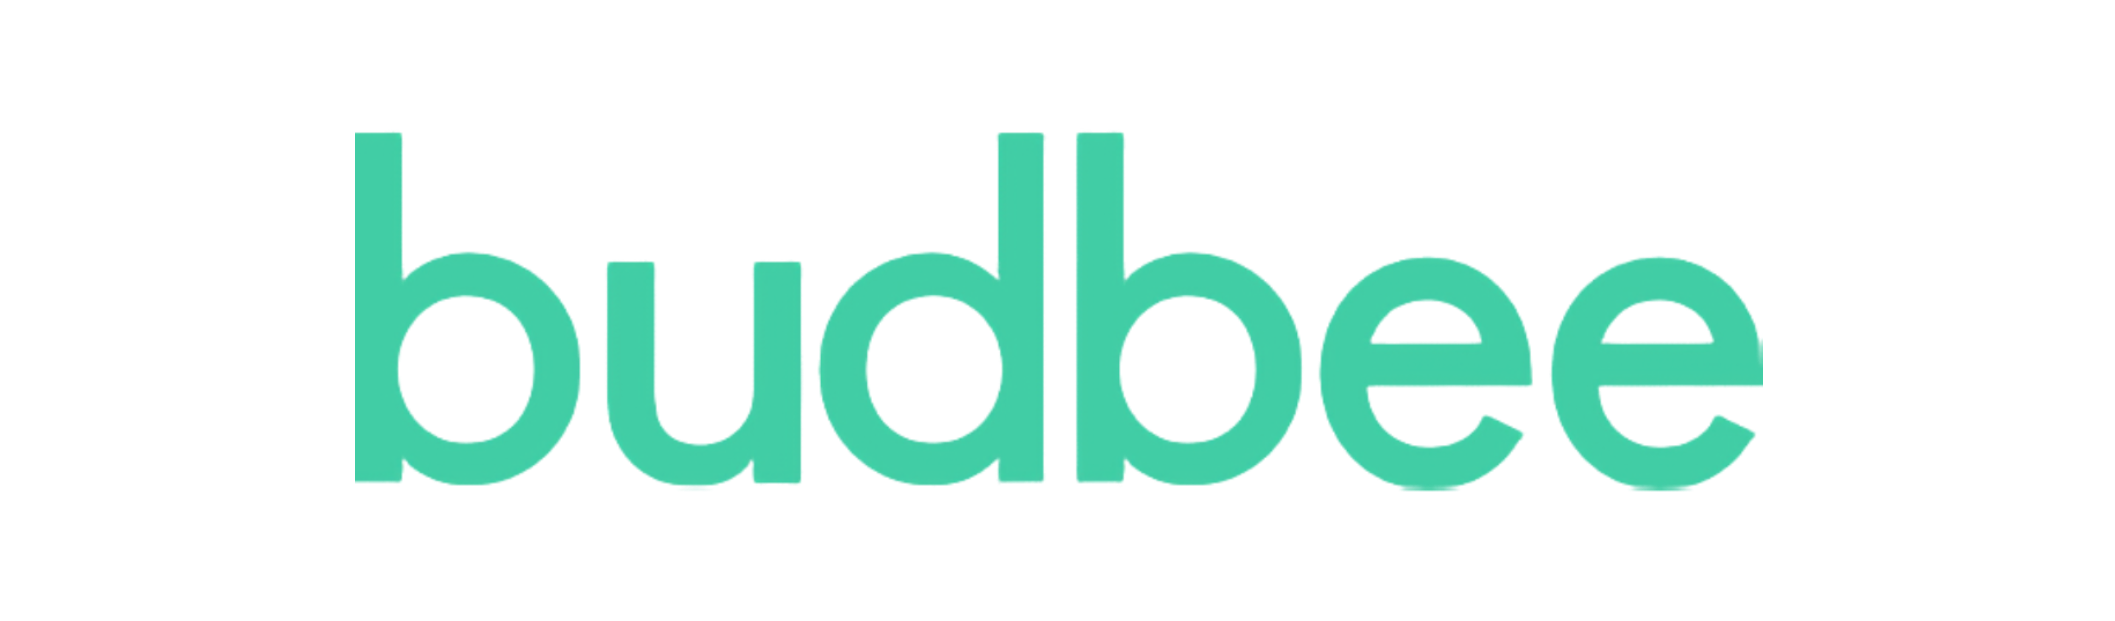 budbee logo